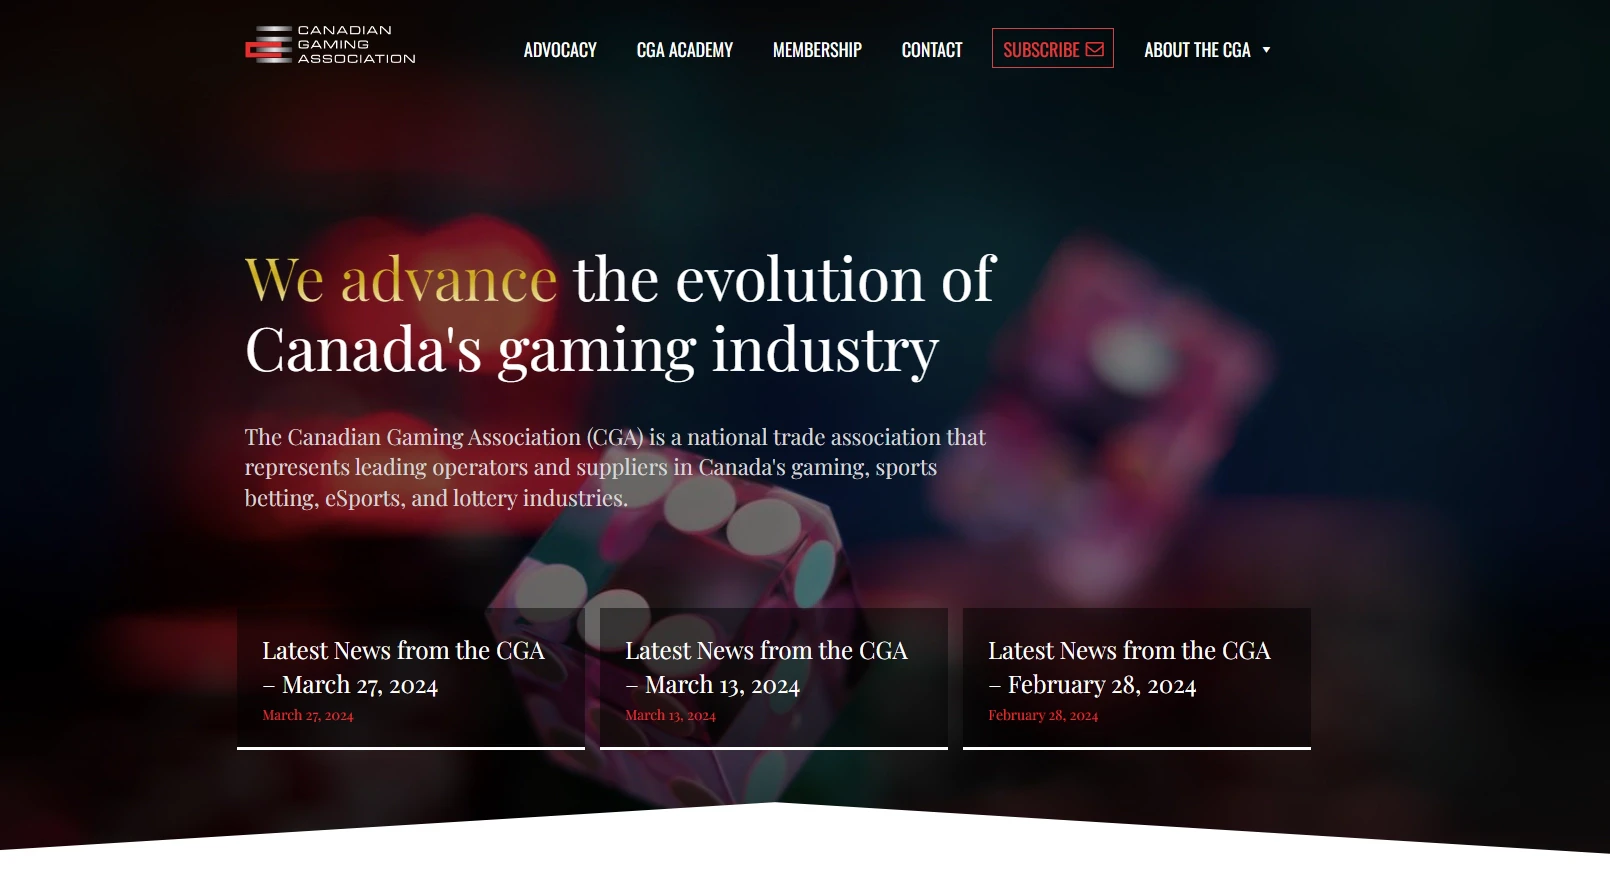 Canadian Gaming Association